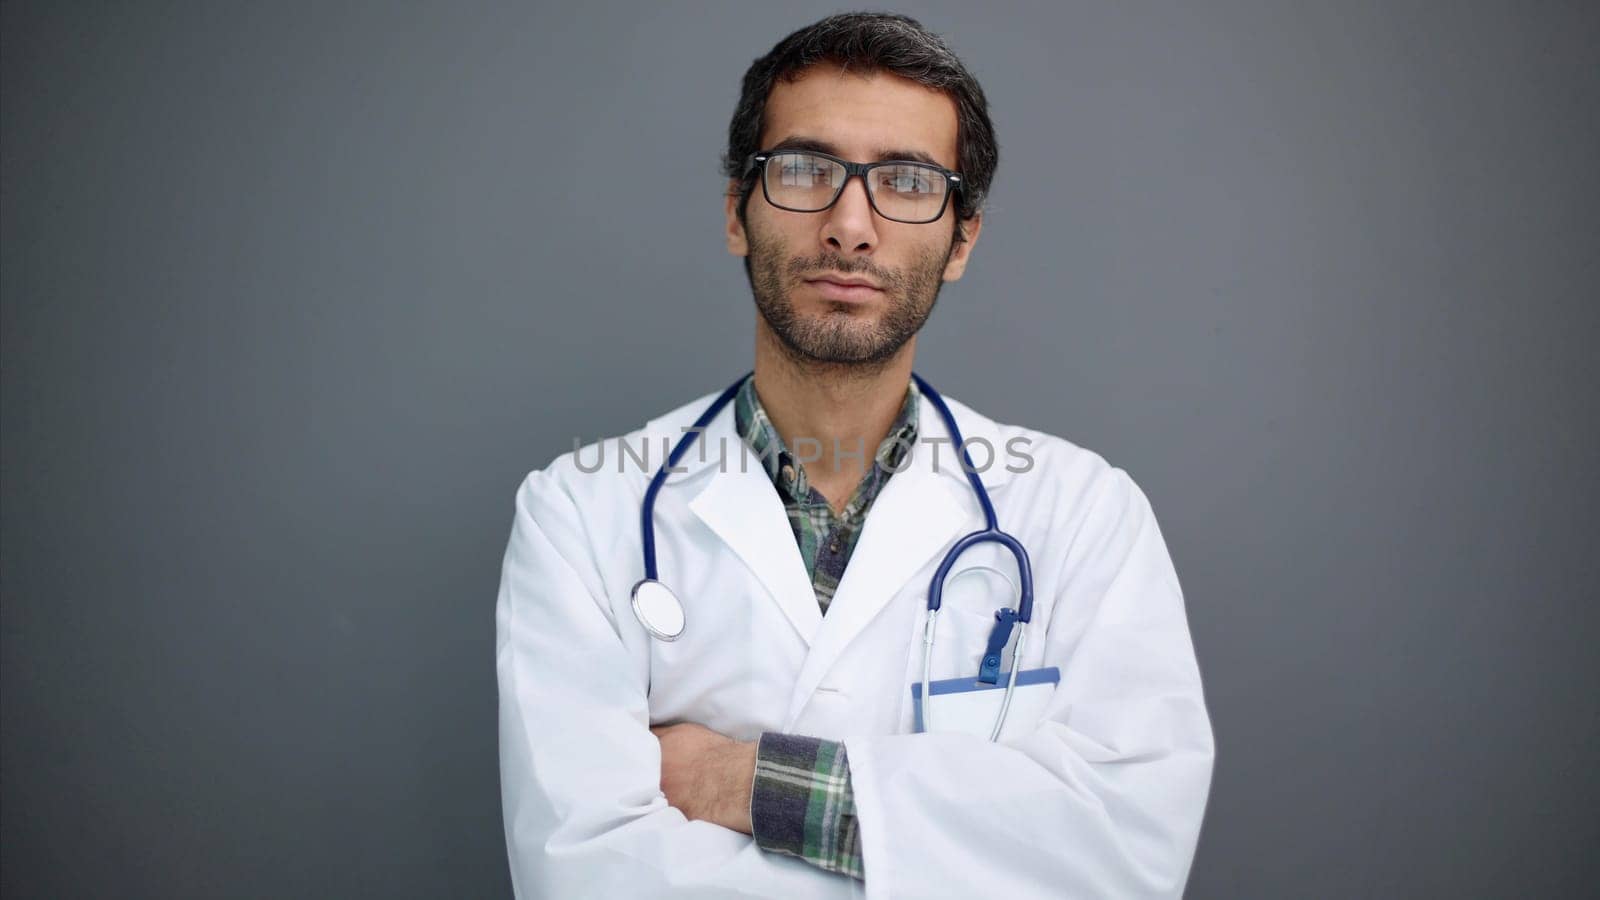 Close up portrait of authoritative professional successful doctor